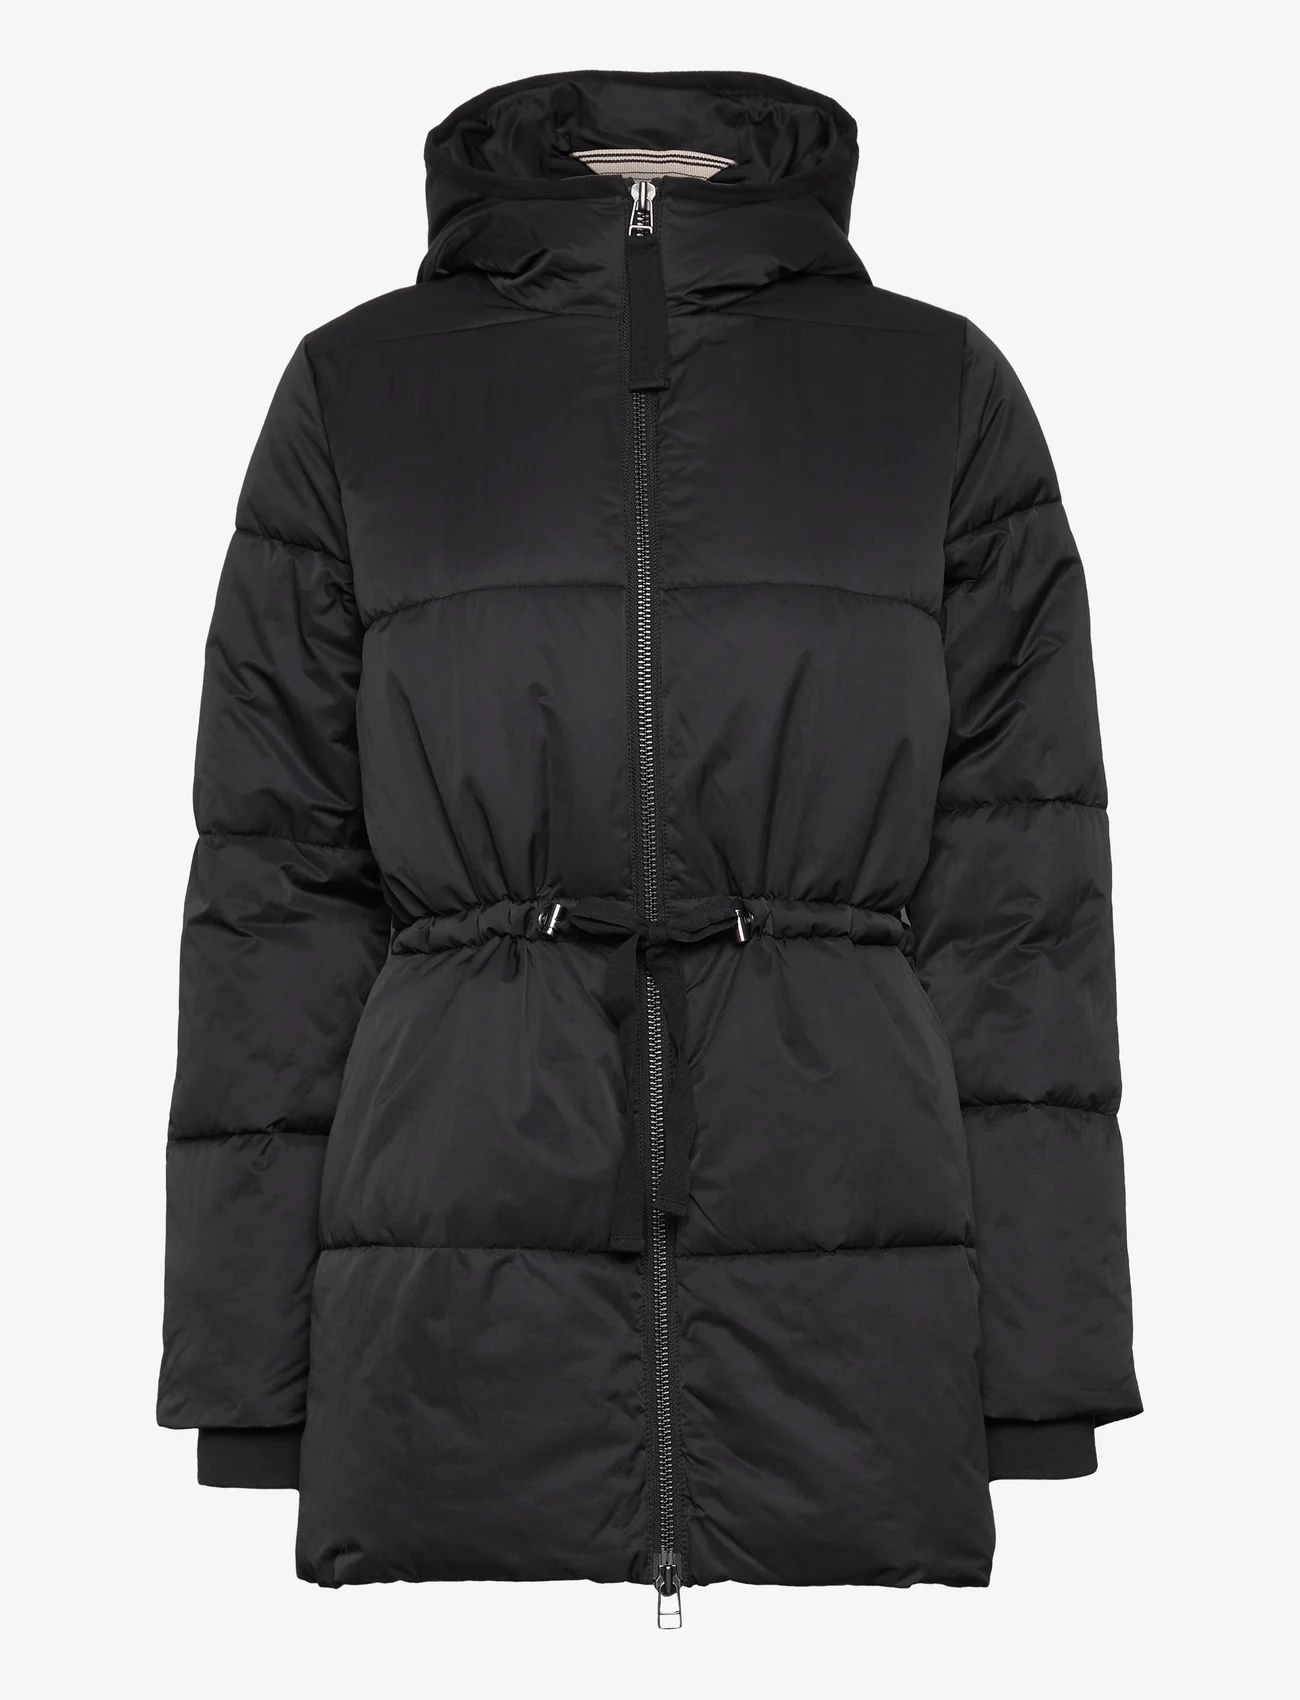 Noa Noa - Heavy outerwear - winter jacket - black - 0